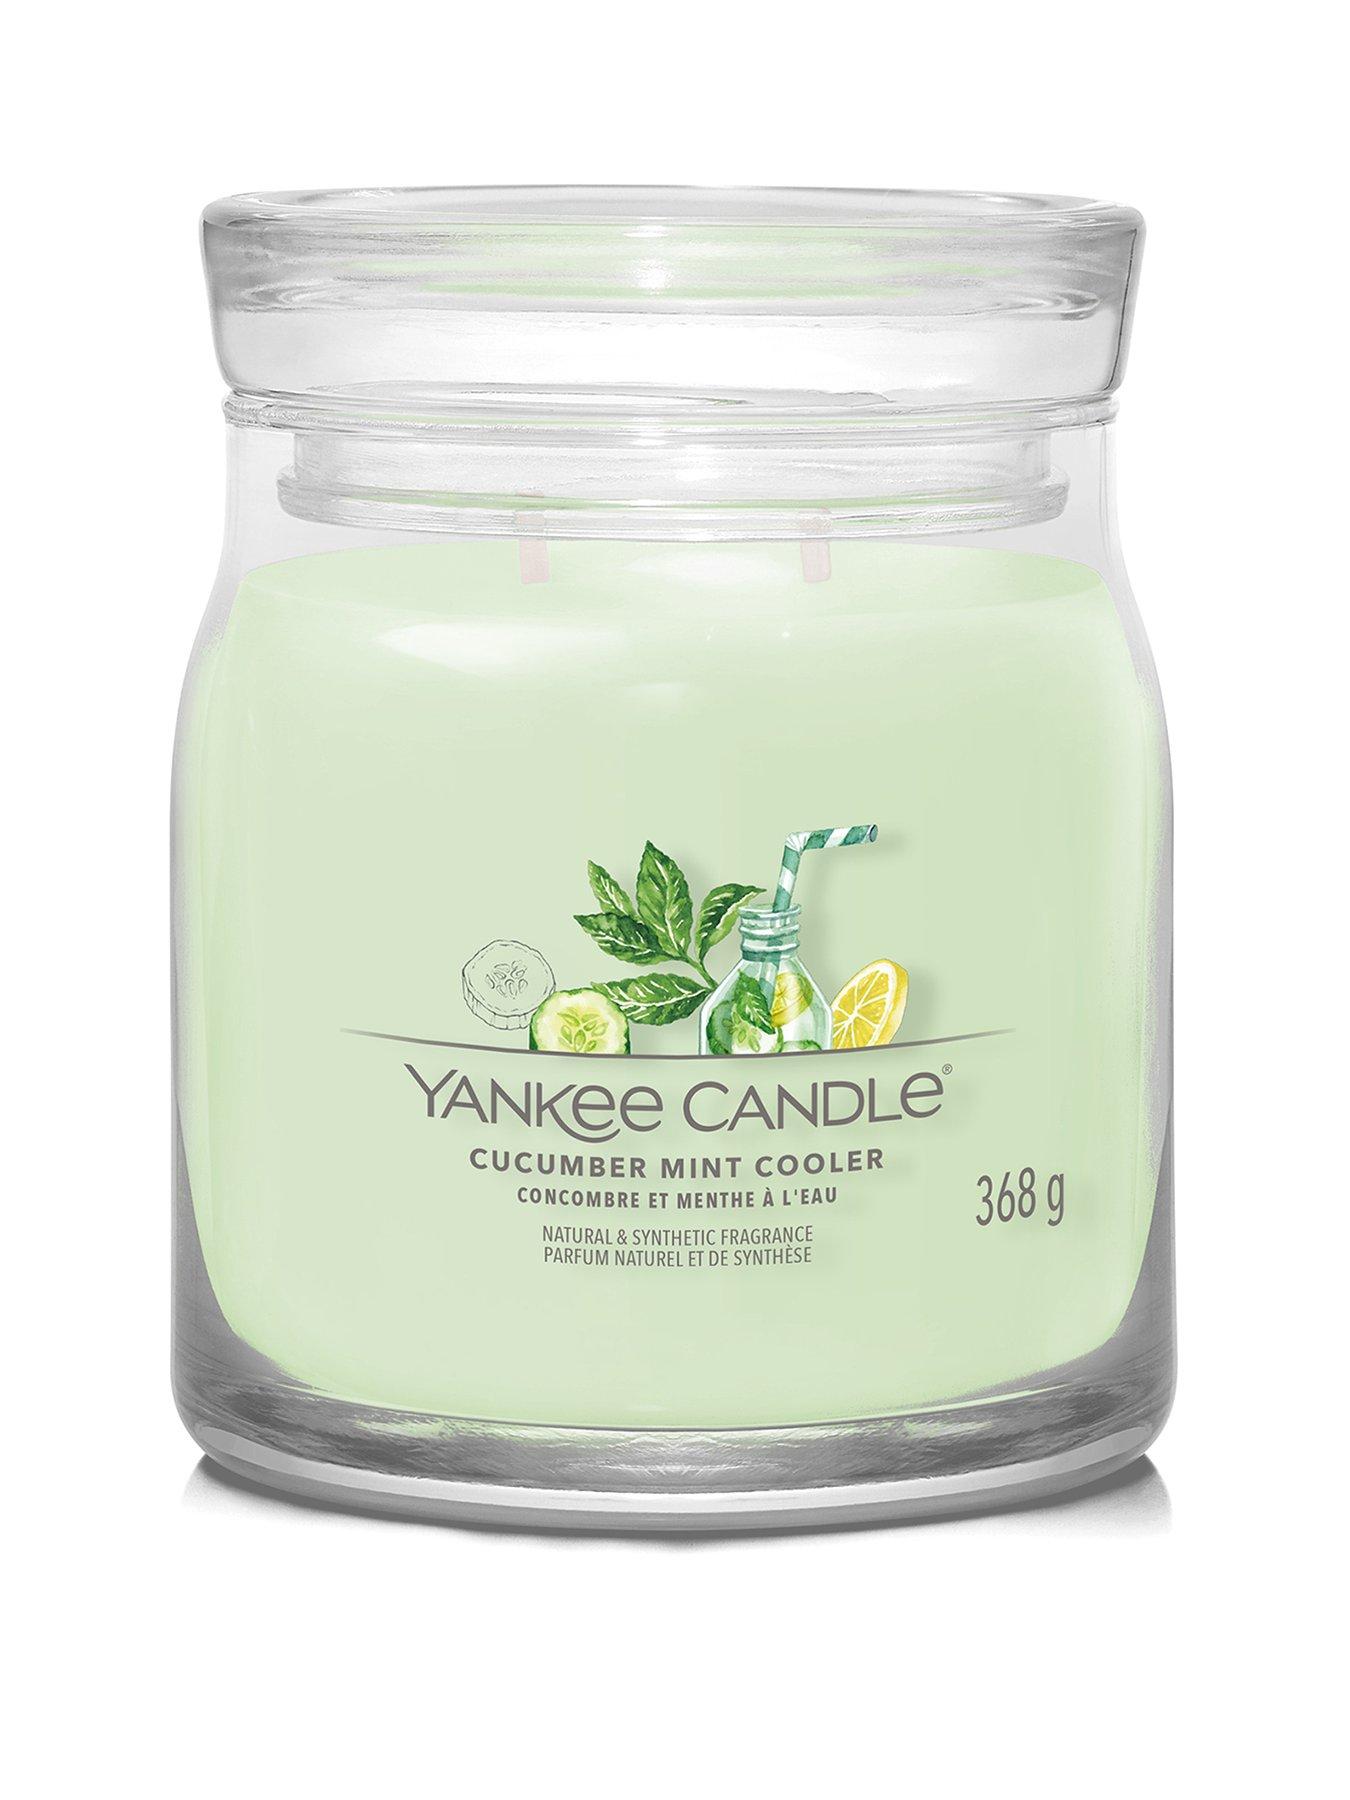 Yankee Candle Signature Collection Medium Jar Candle – Cucumber Mint Cooler